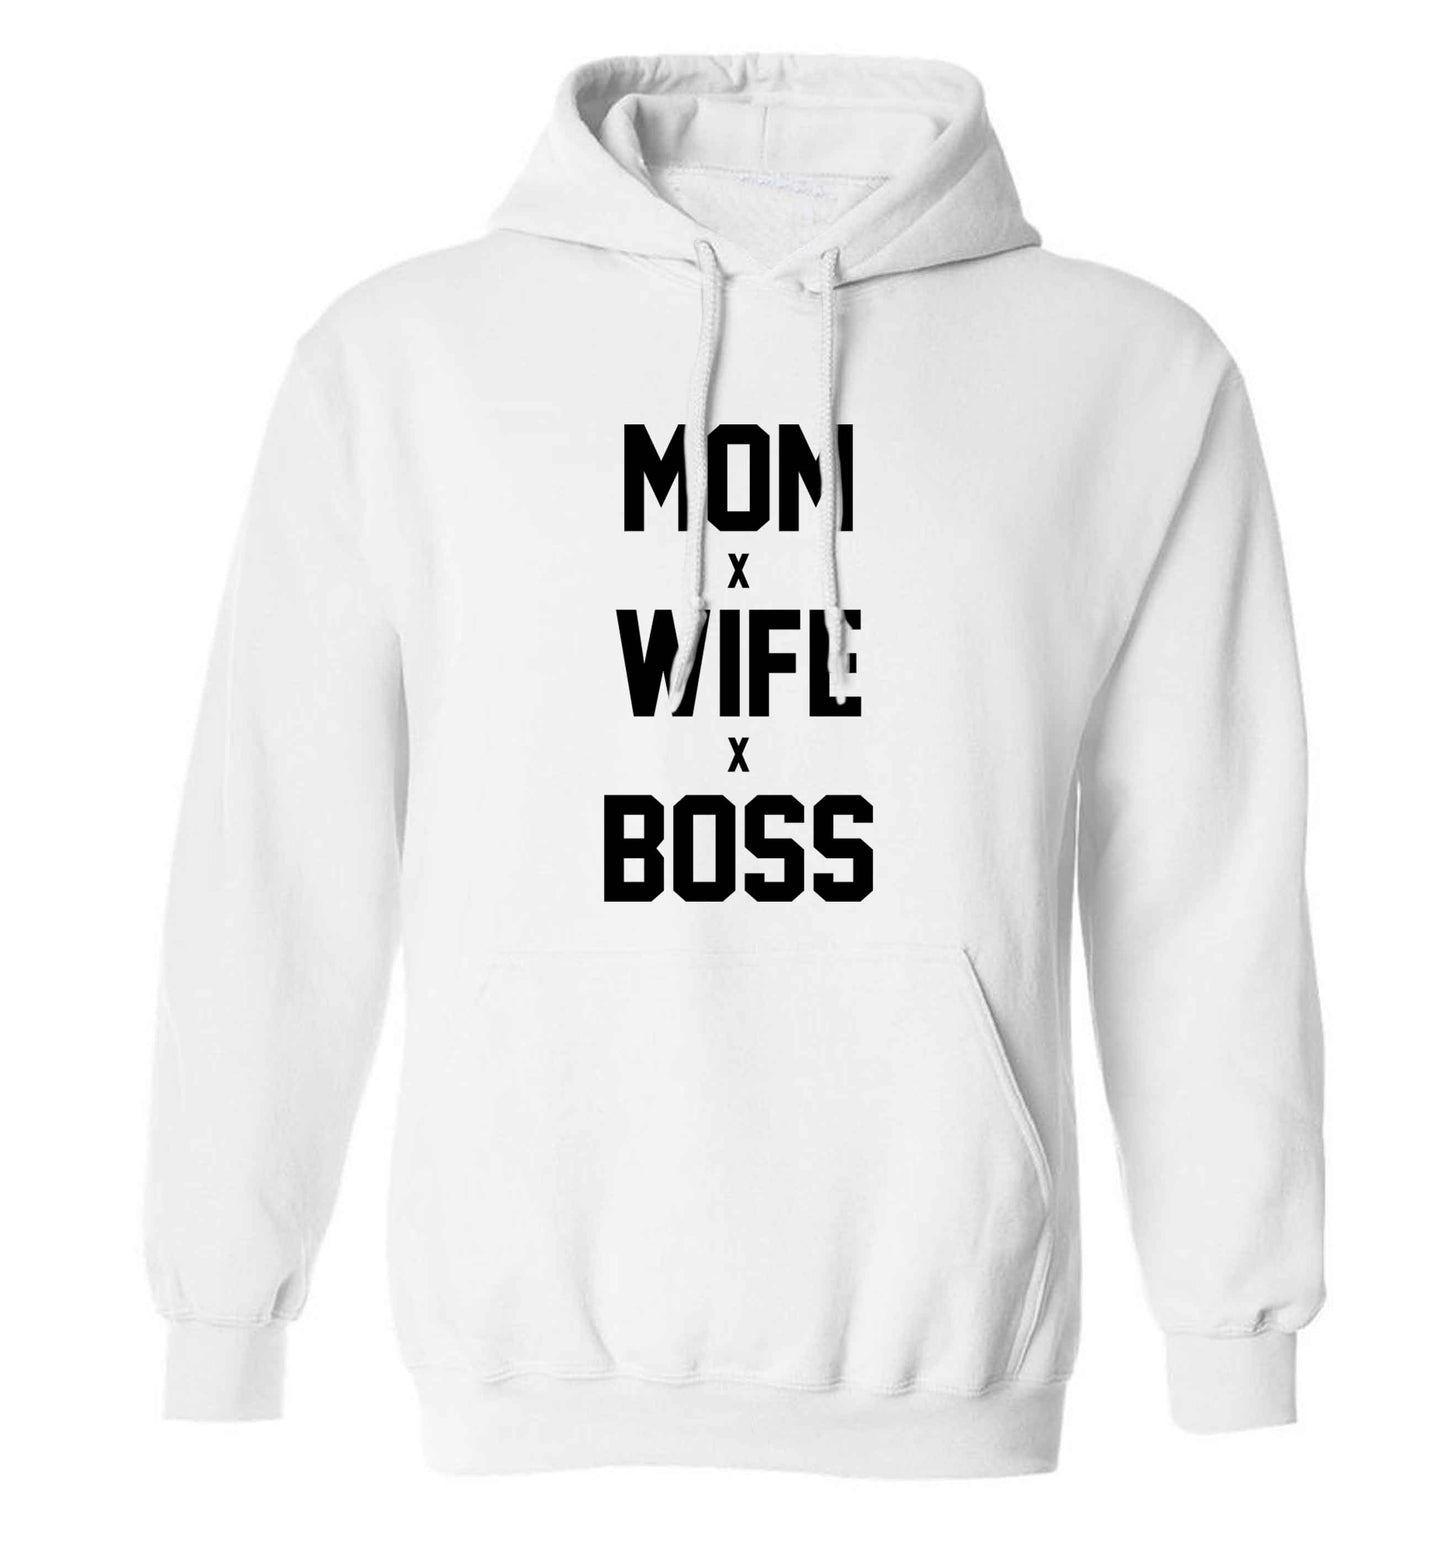 Mum wife boss adults unisex white hoodie 2XL